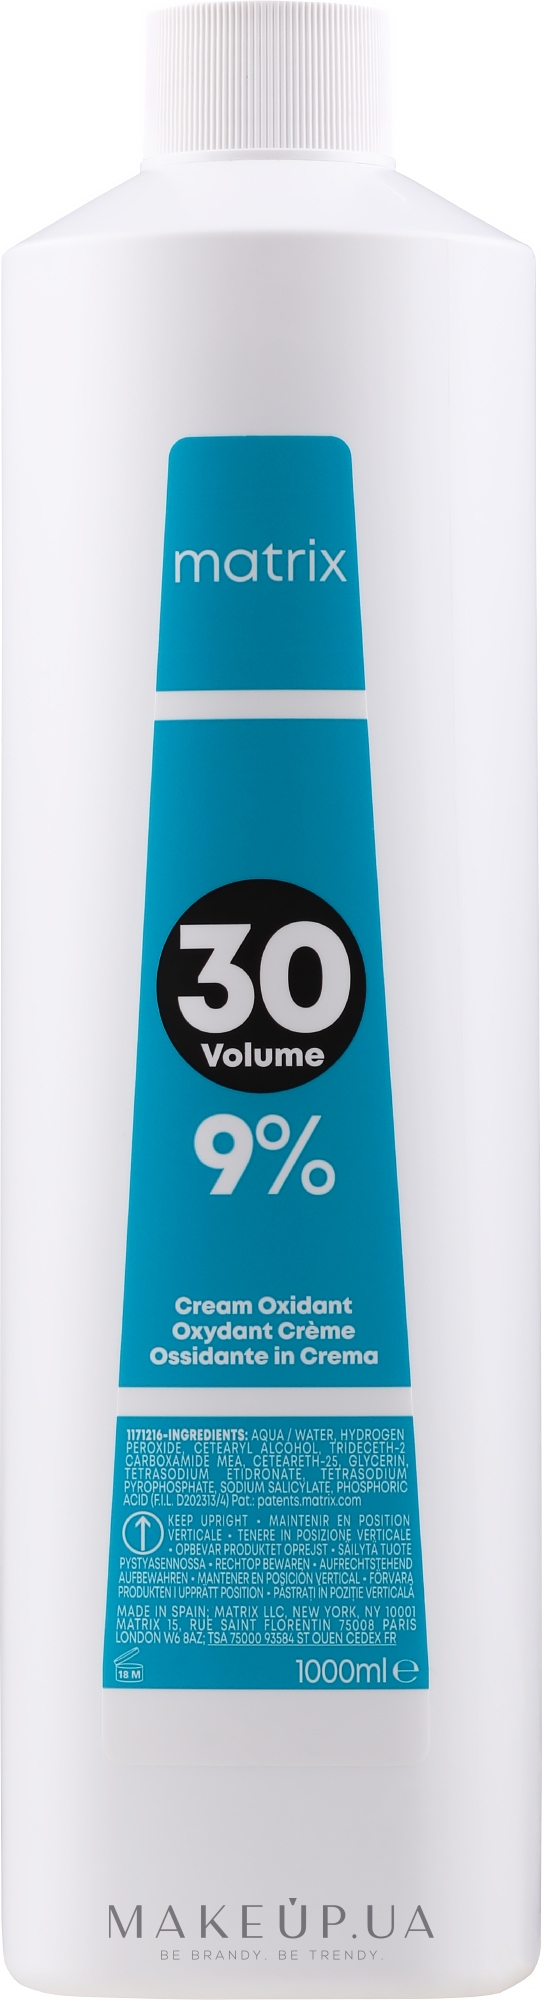 Крем-оксидант - Matrix Cream Developer 30 Vol. 9 %  — фото 1000ml